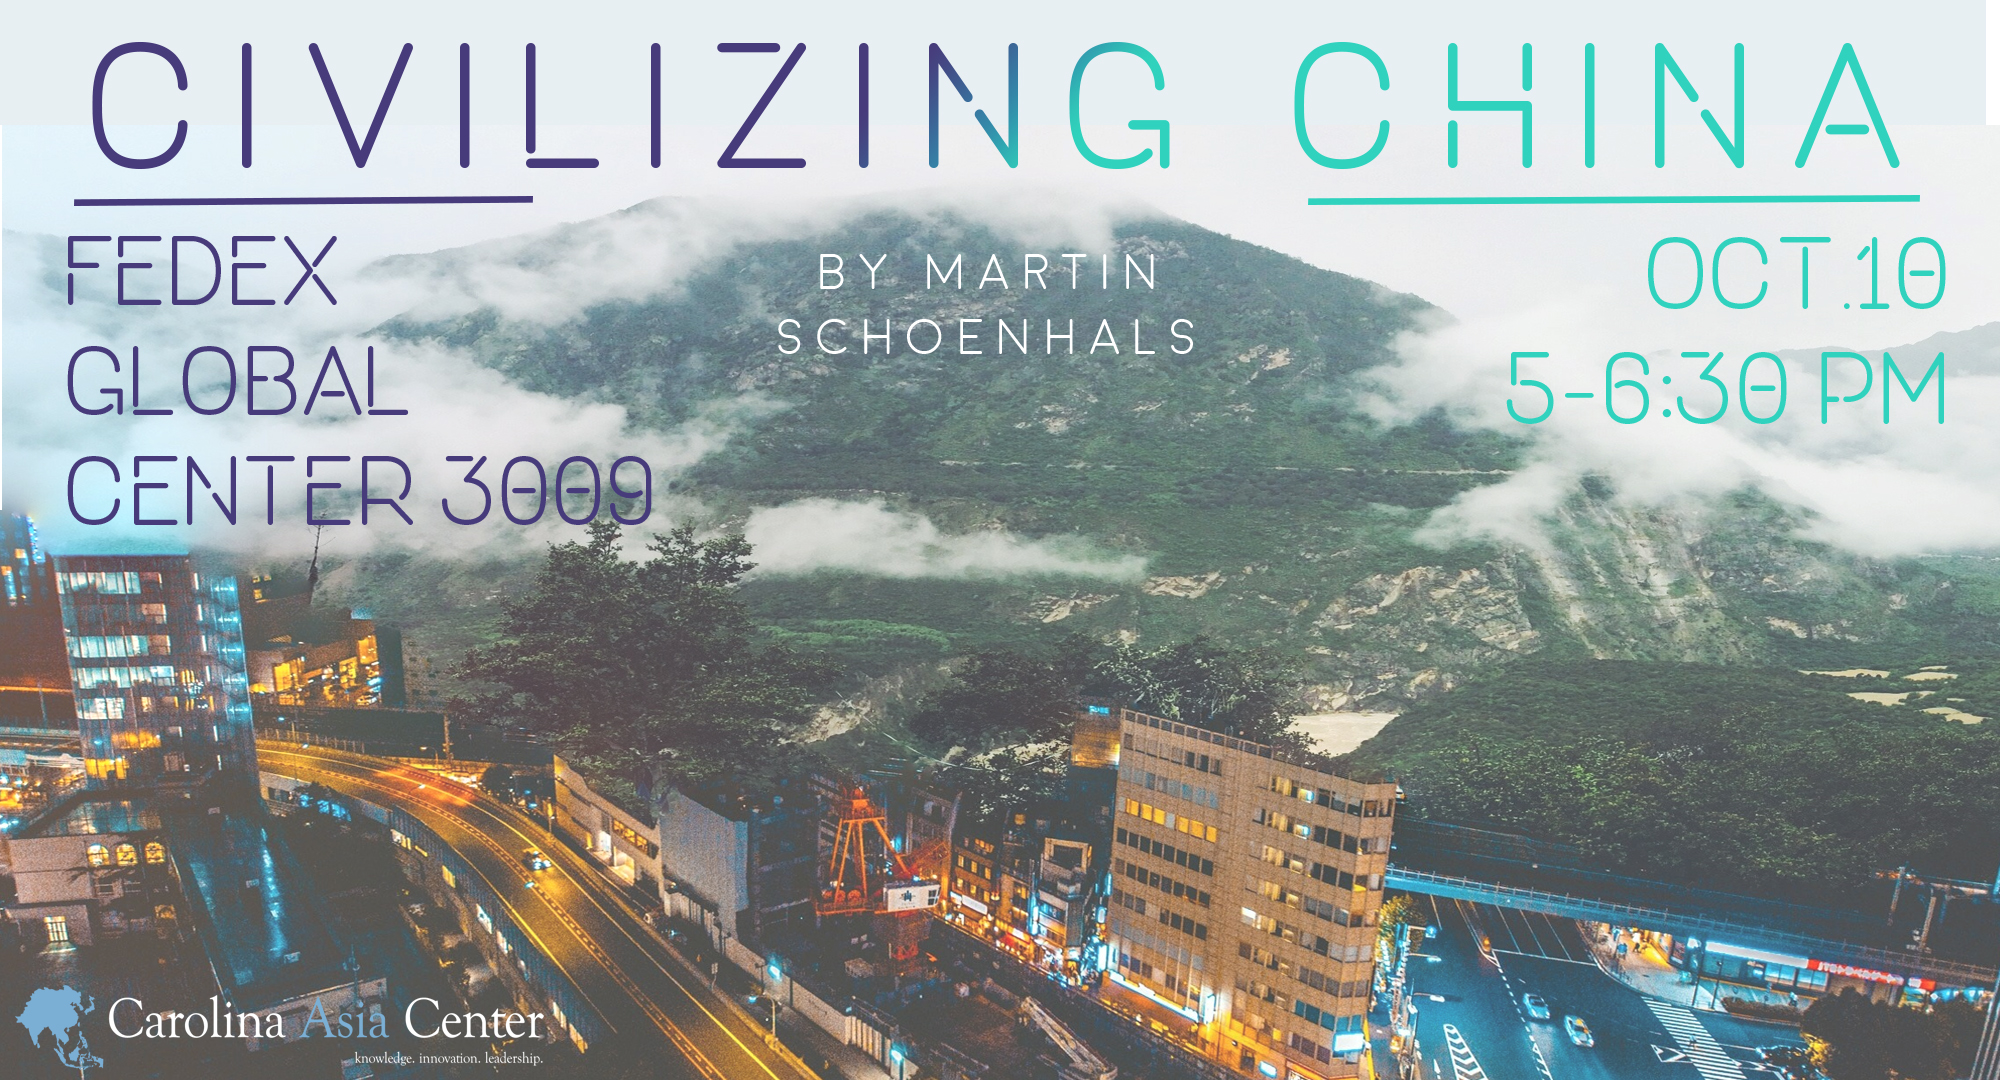 Civilizing China: A Talk By Martin Schoenhals